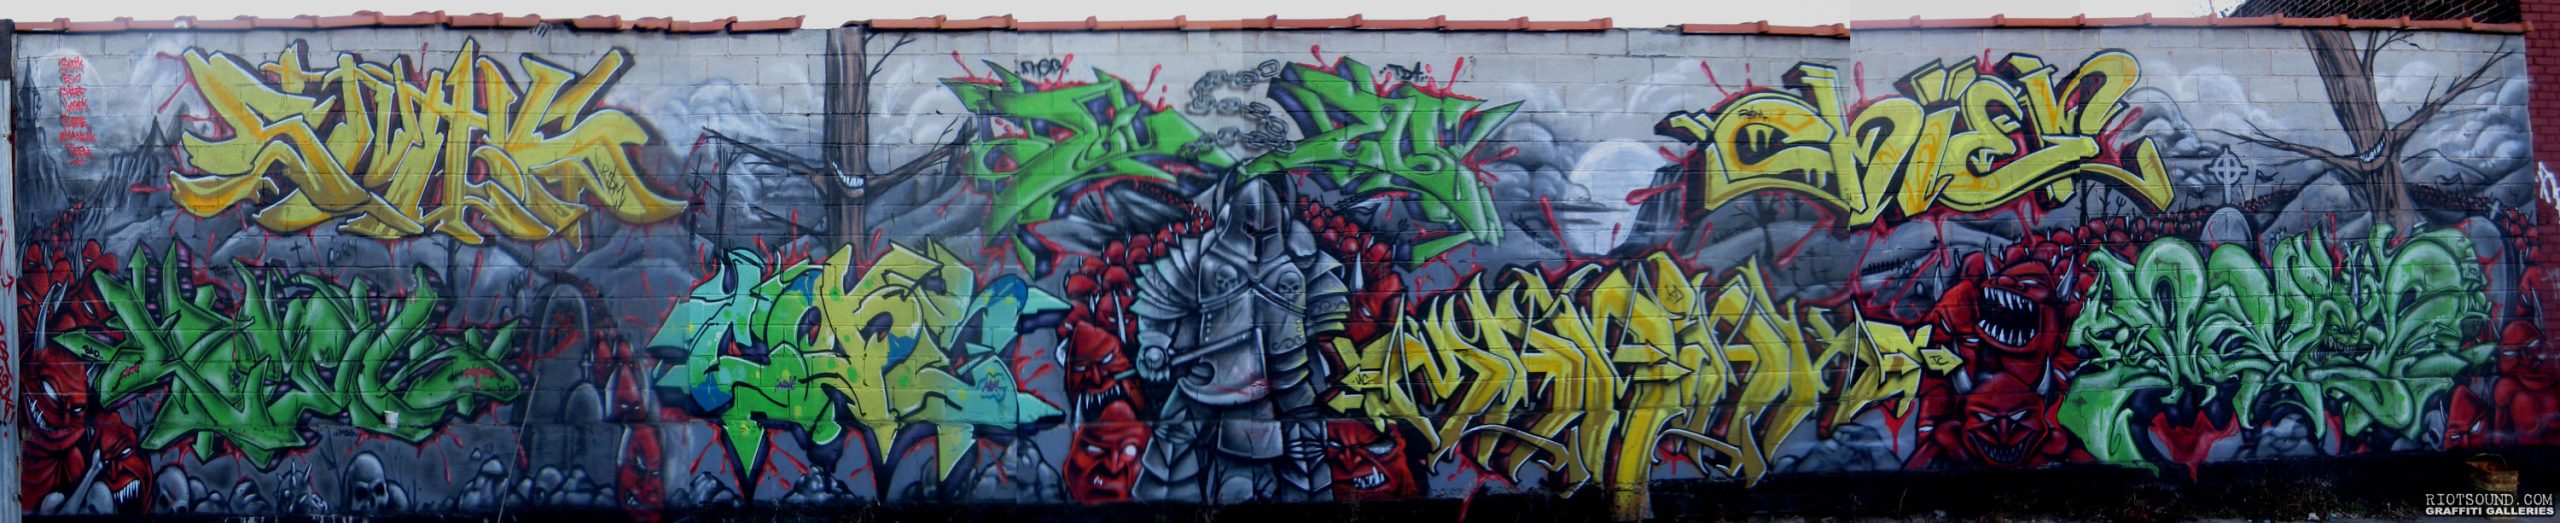 Graffiti Wall In Bronx NYC